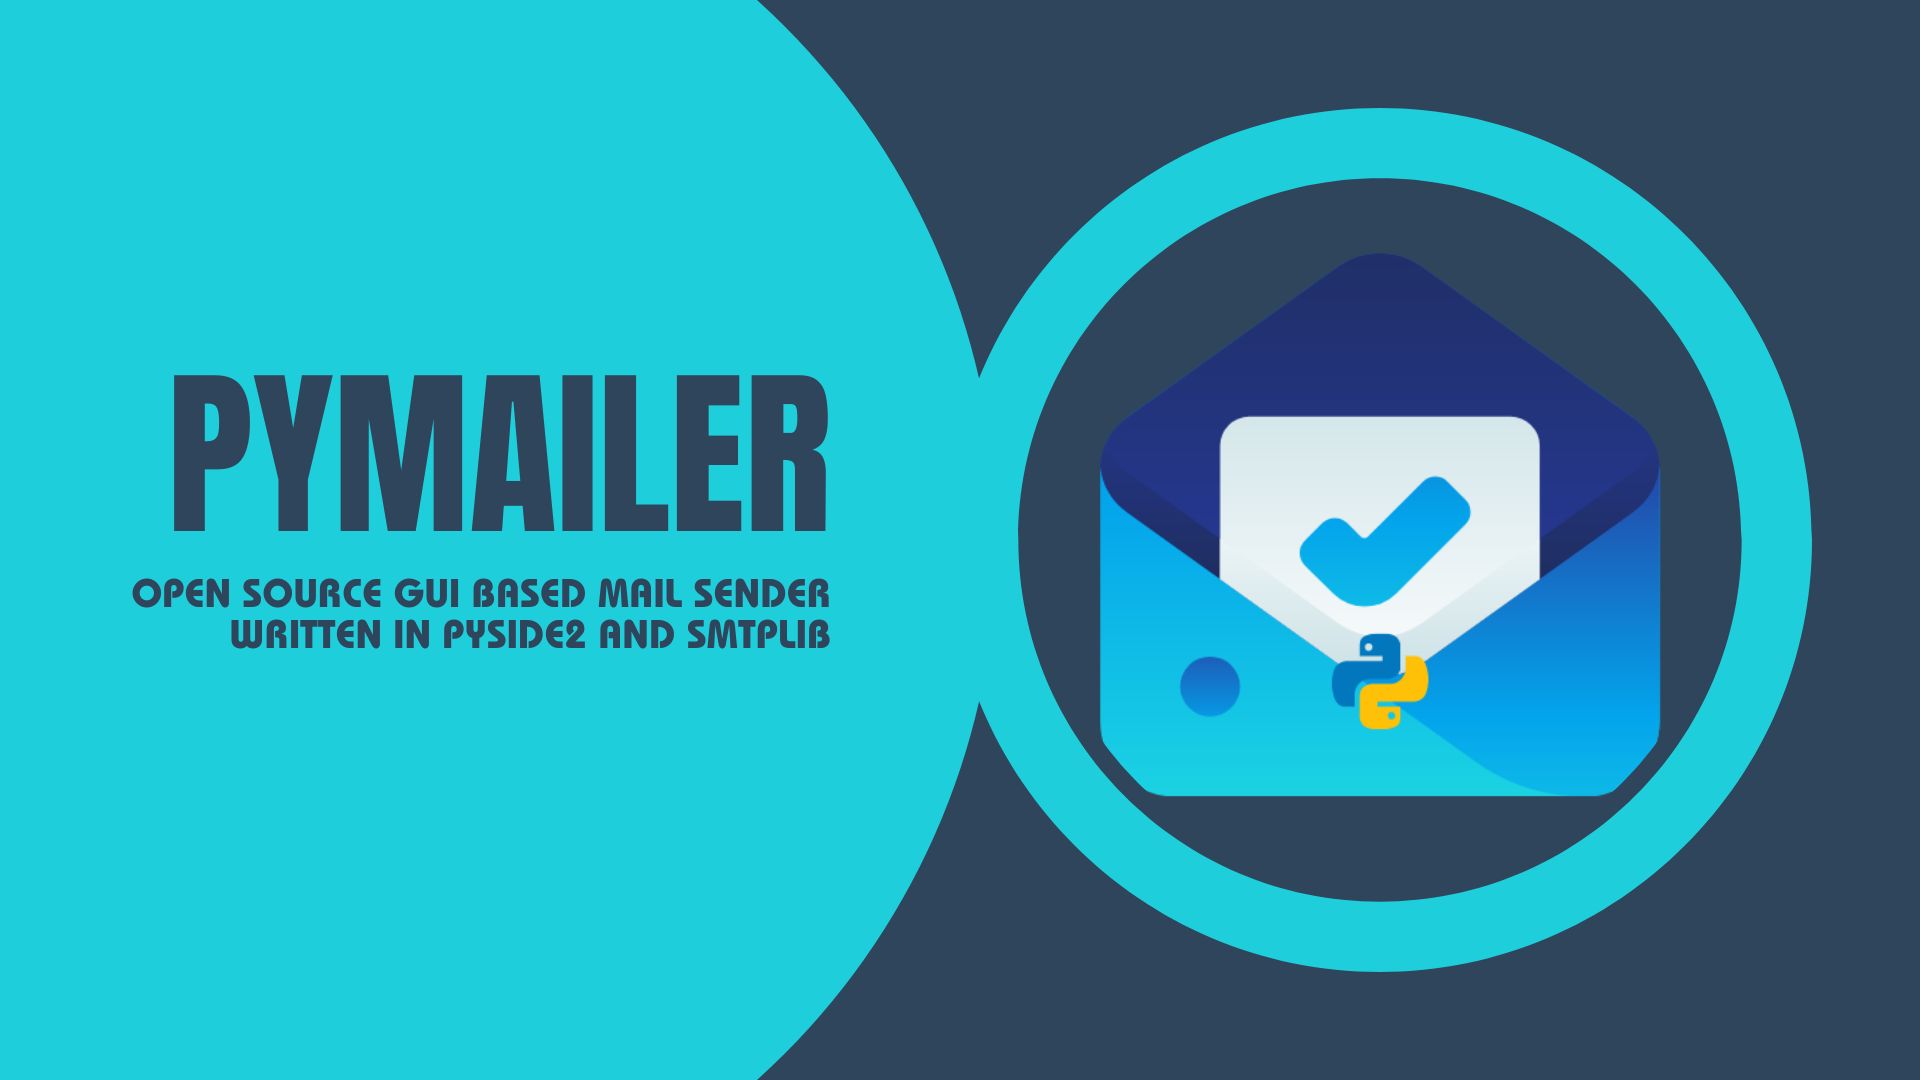 PyMailer - Open Source GUI Based Mail Sender